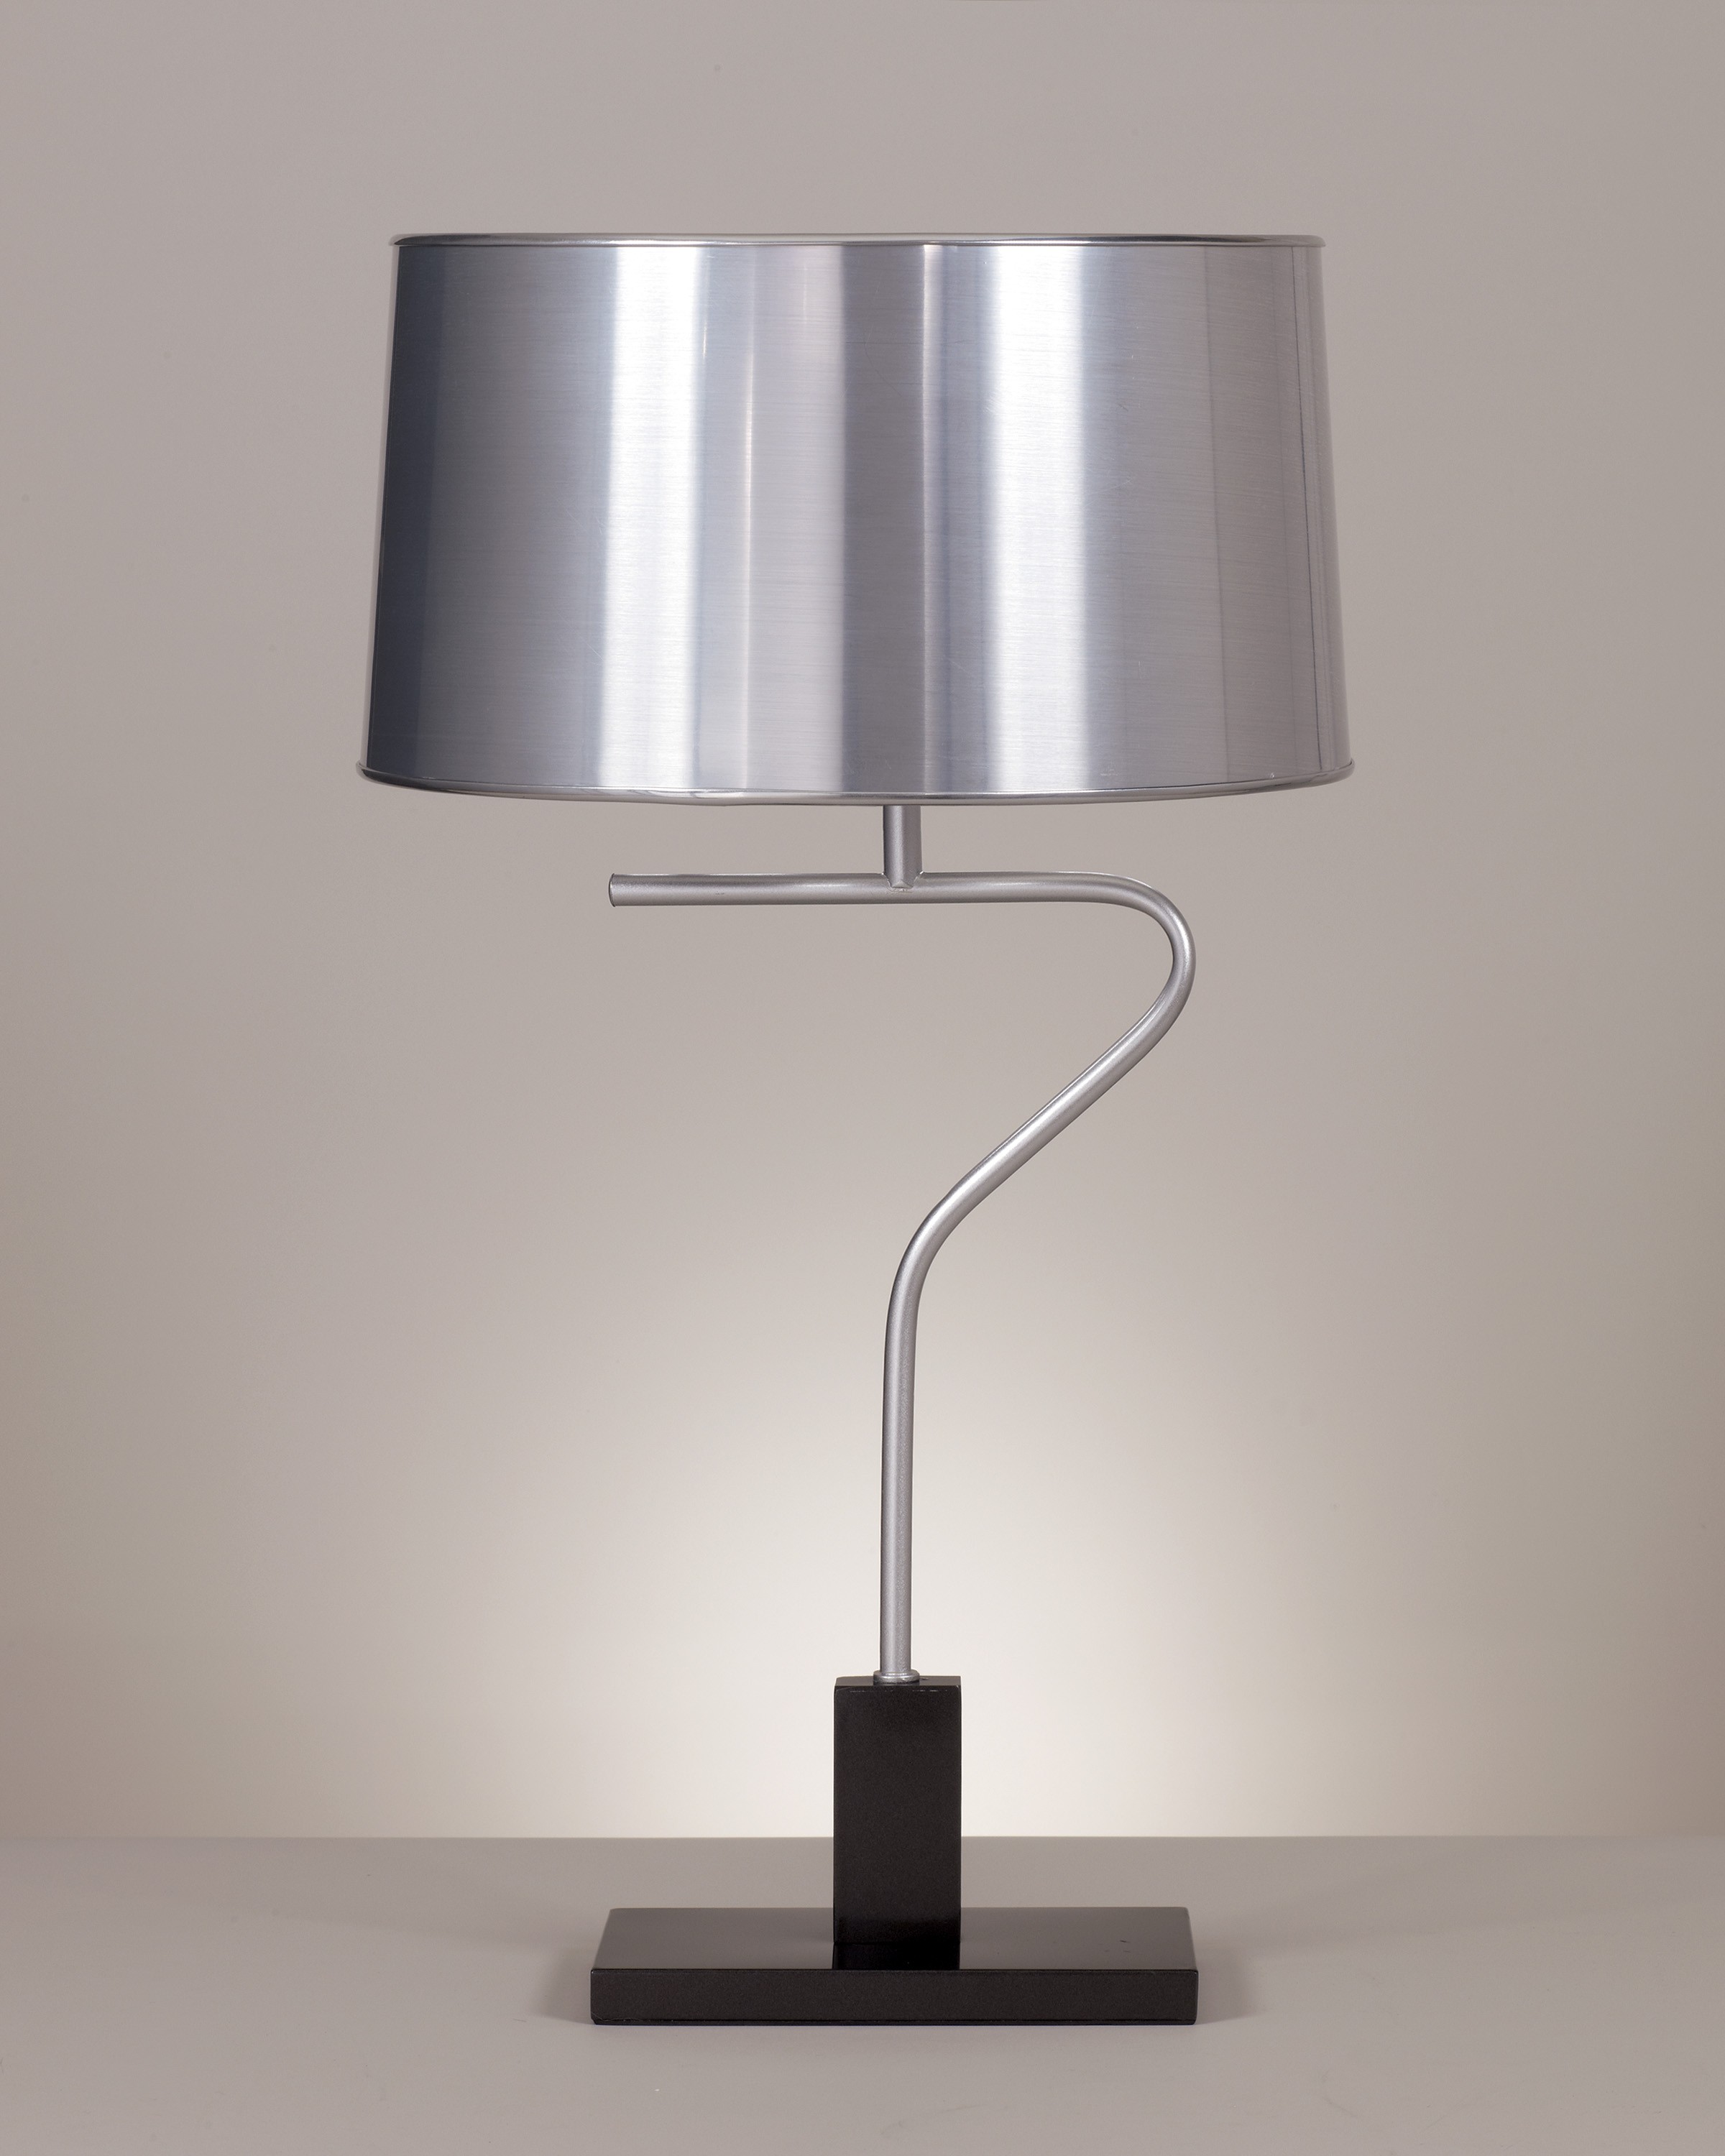 Contemporary Reading Lamp Design photo - 3